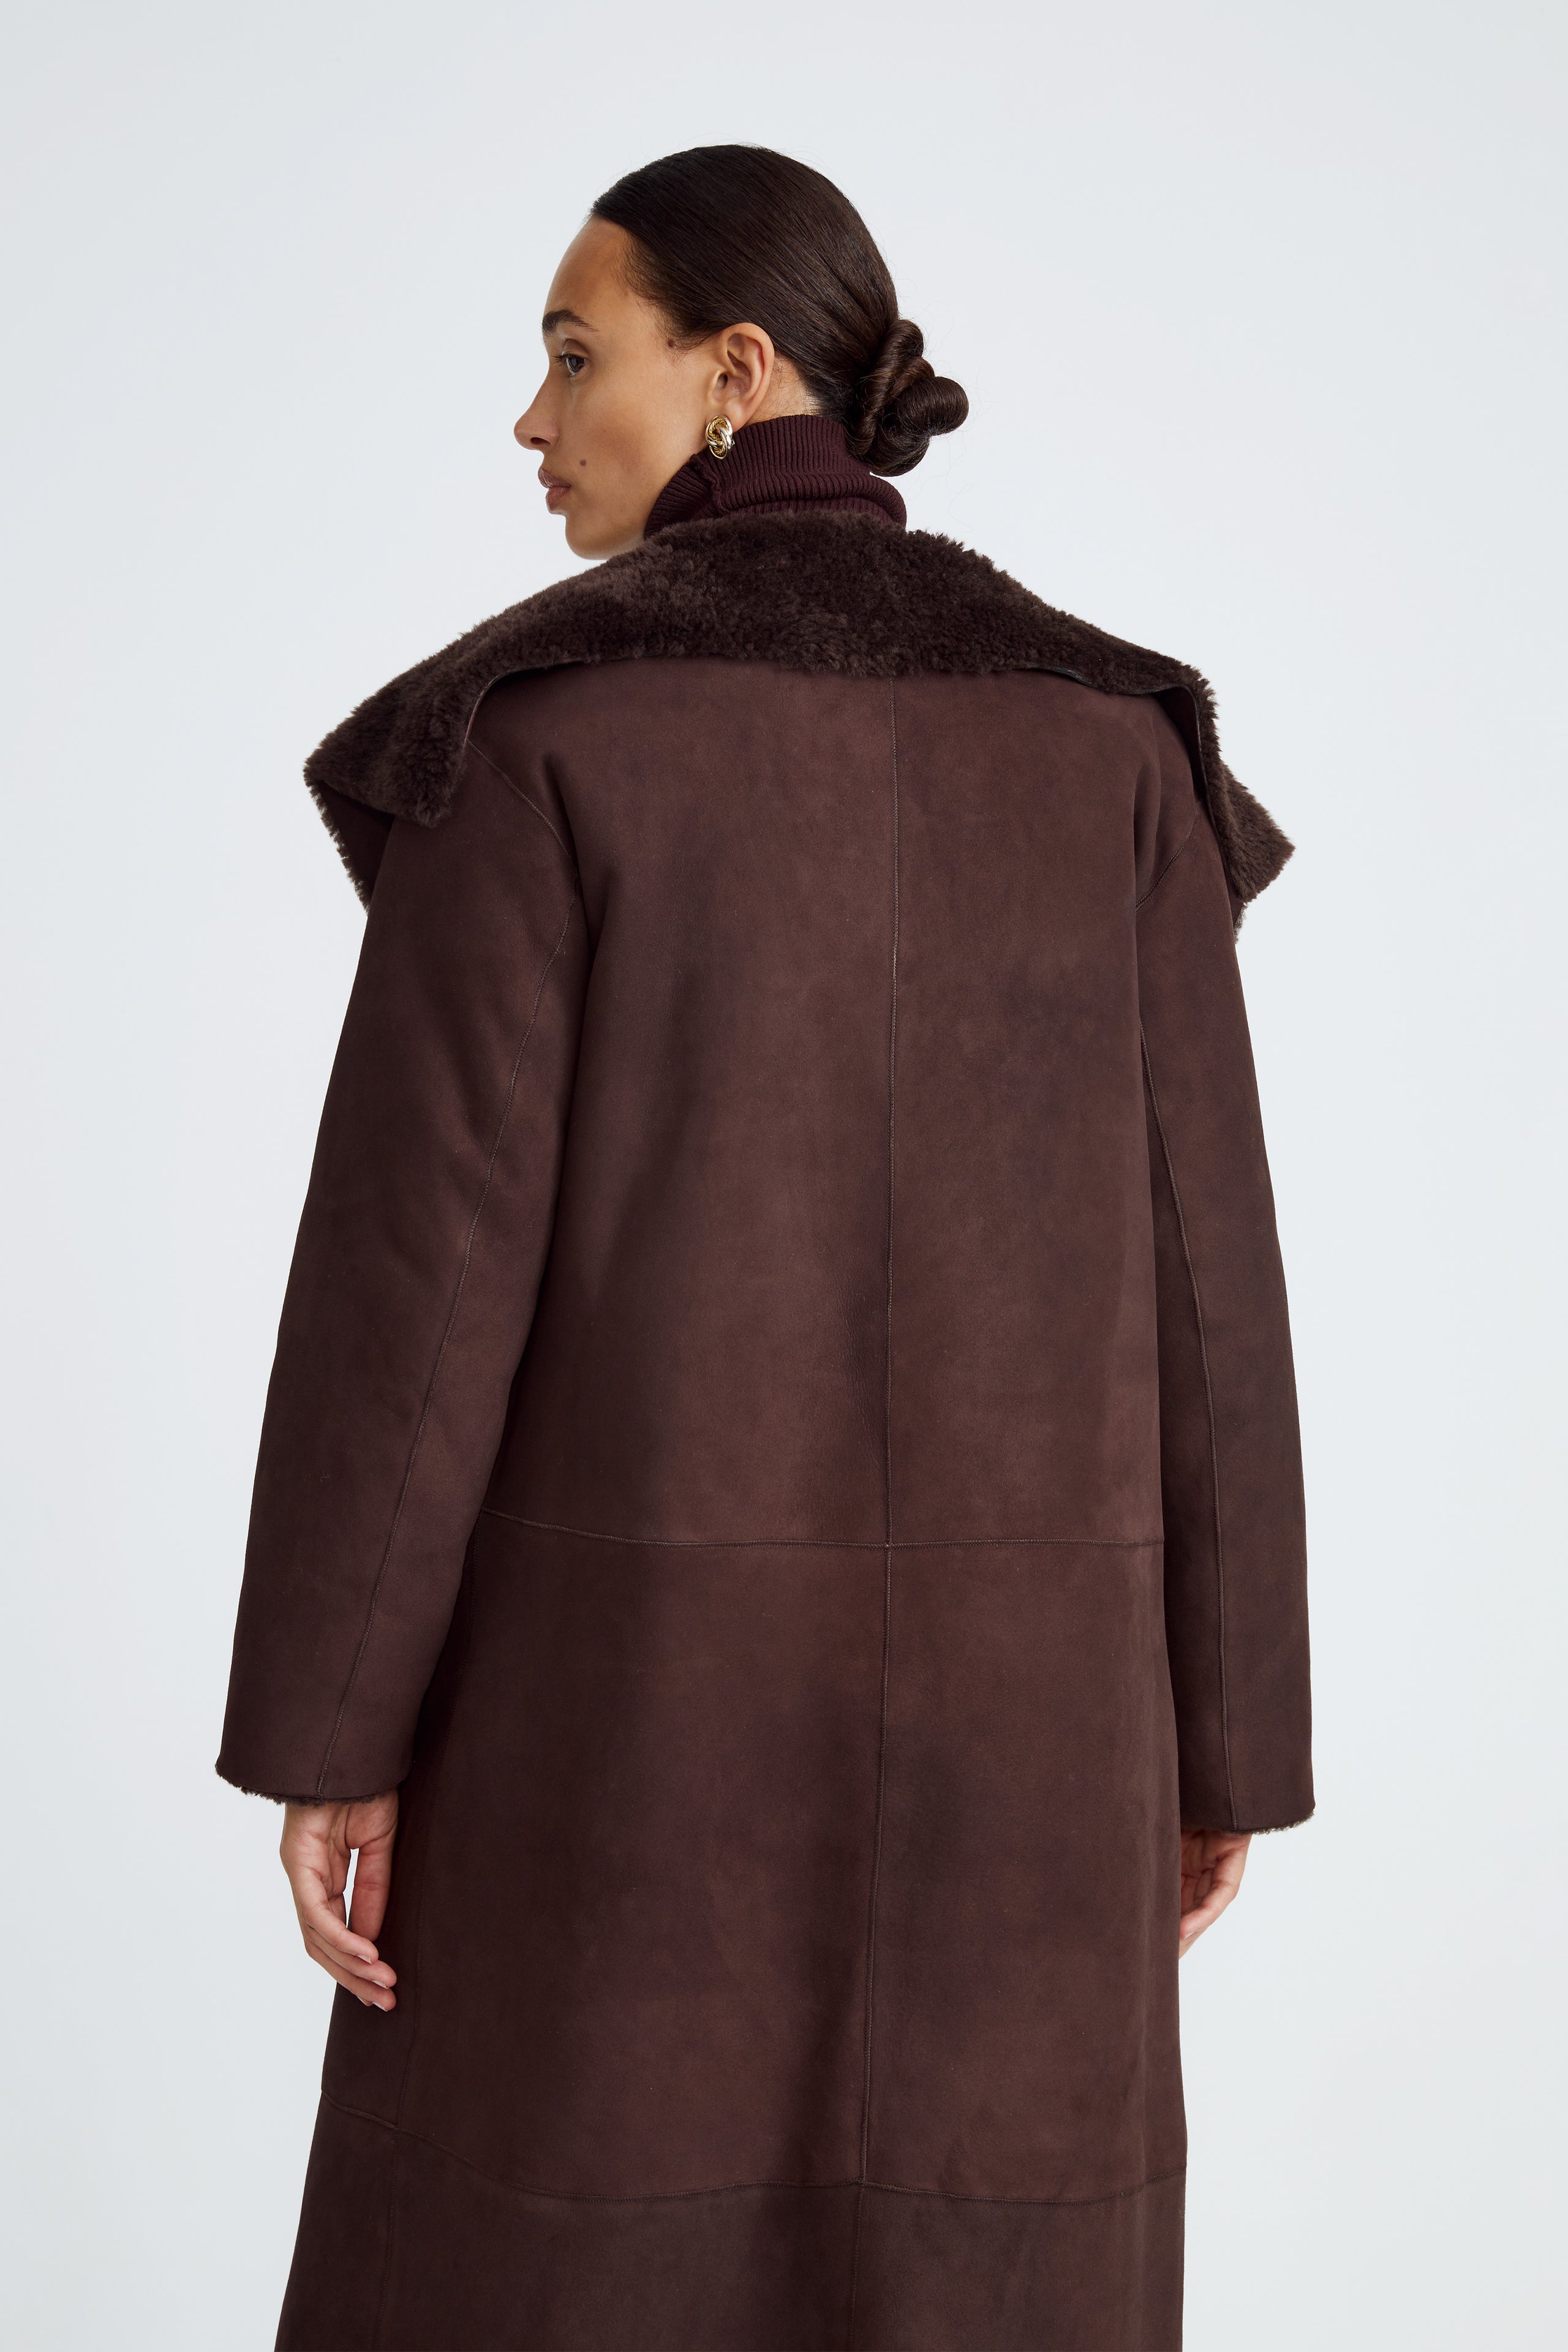 Model is wearing the Birthday Coat Dark Chocolate Draped Shearling Coat Close Up